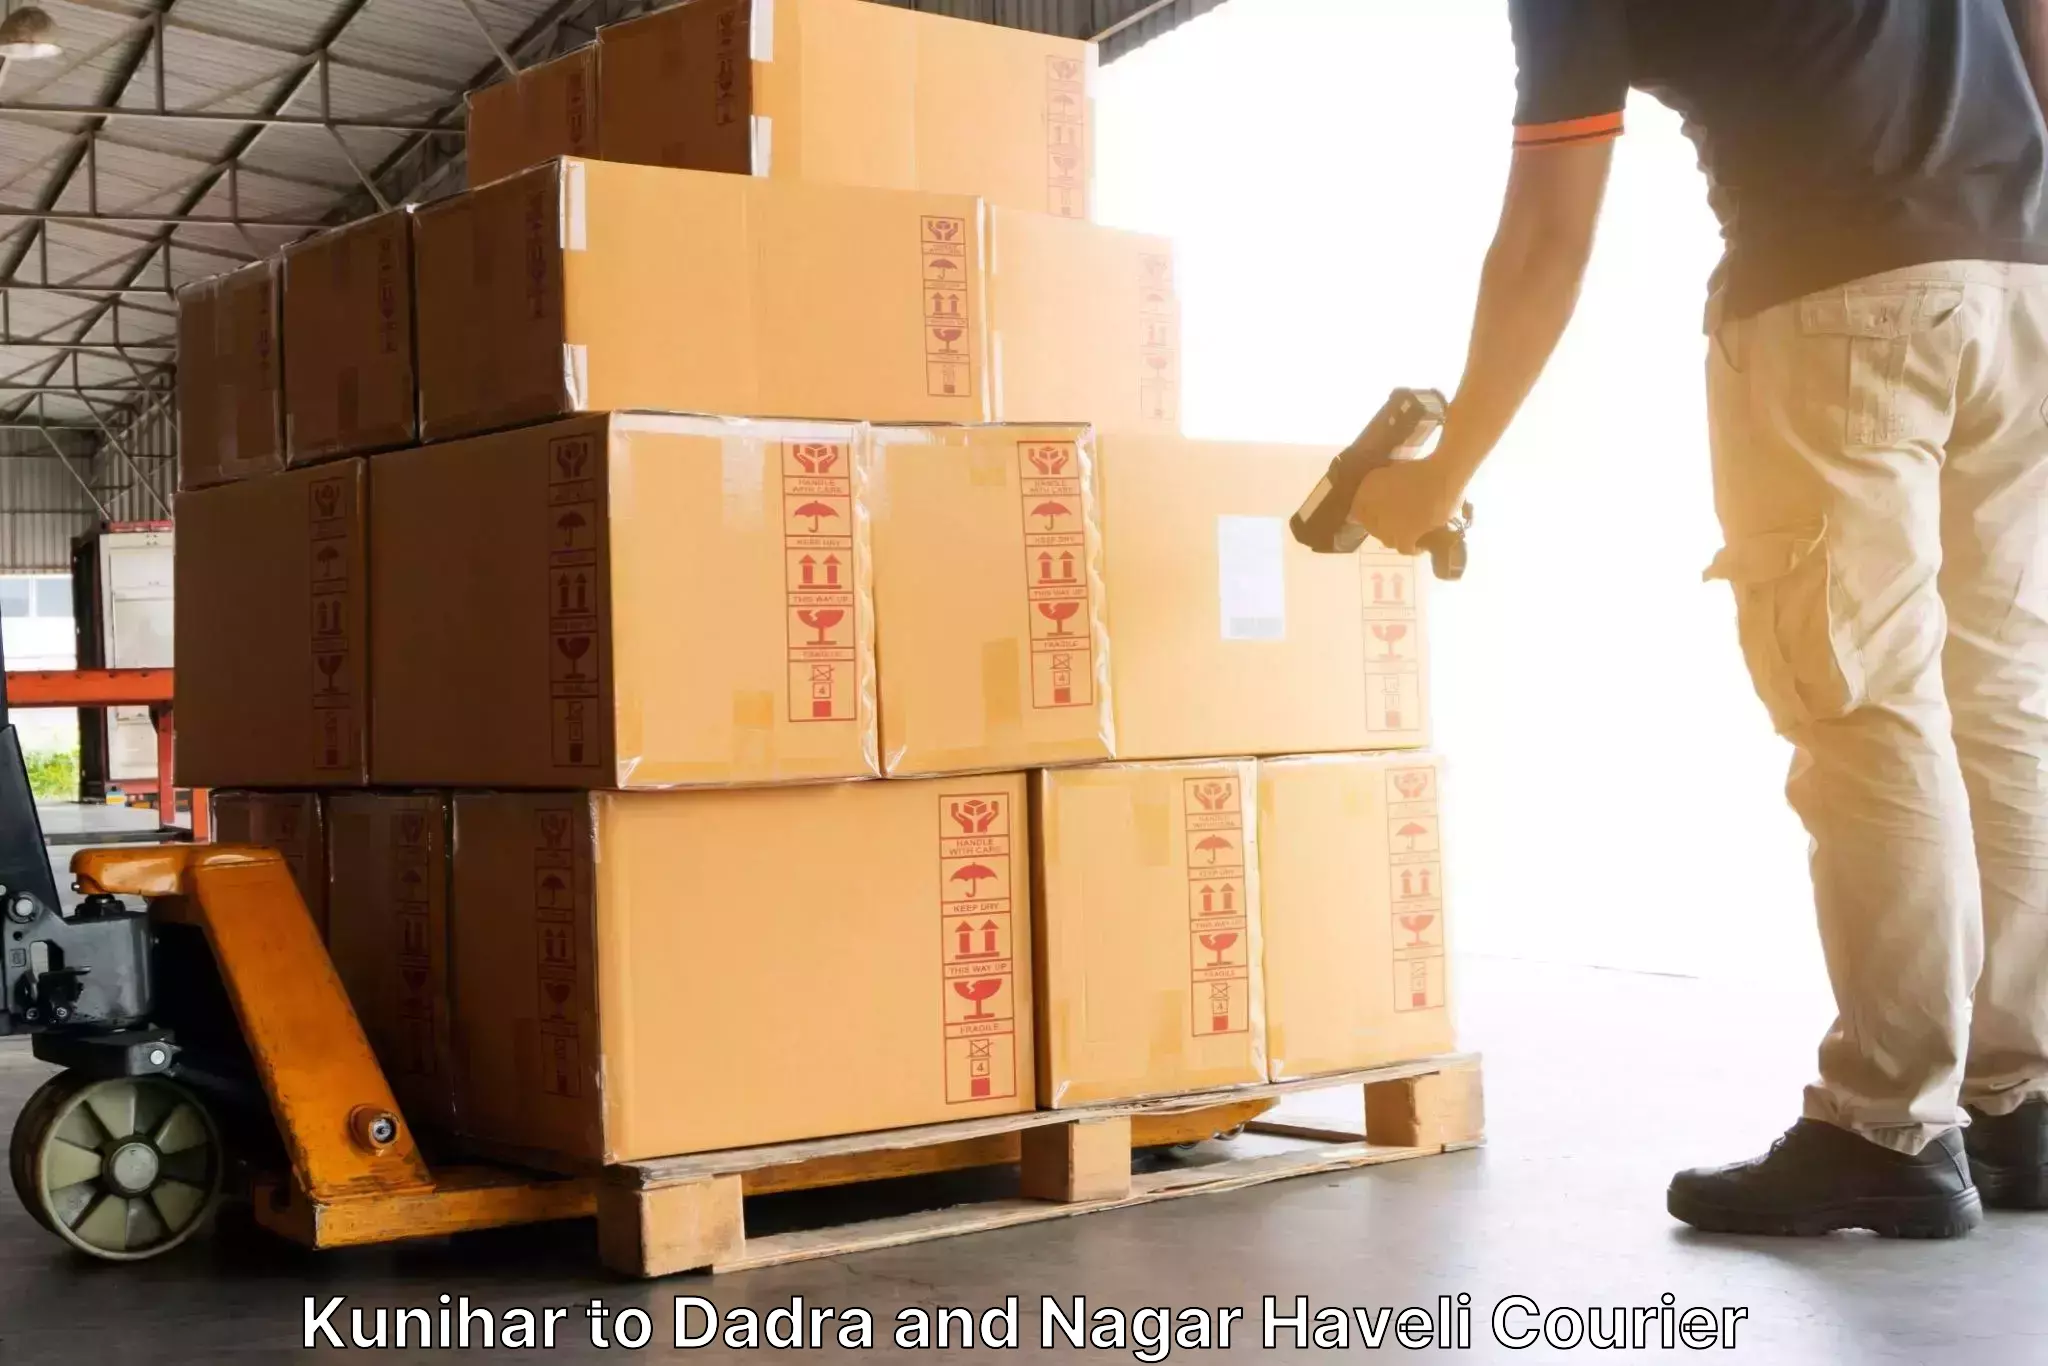 High-capacity parcel service Kunihar to Silvassa